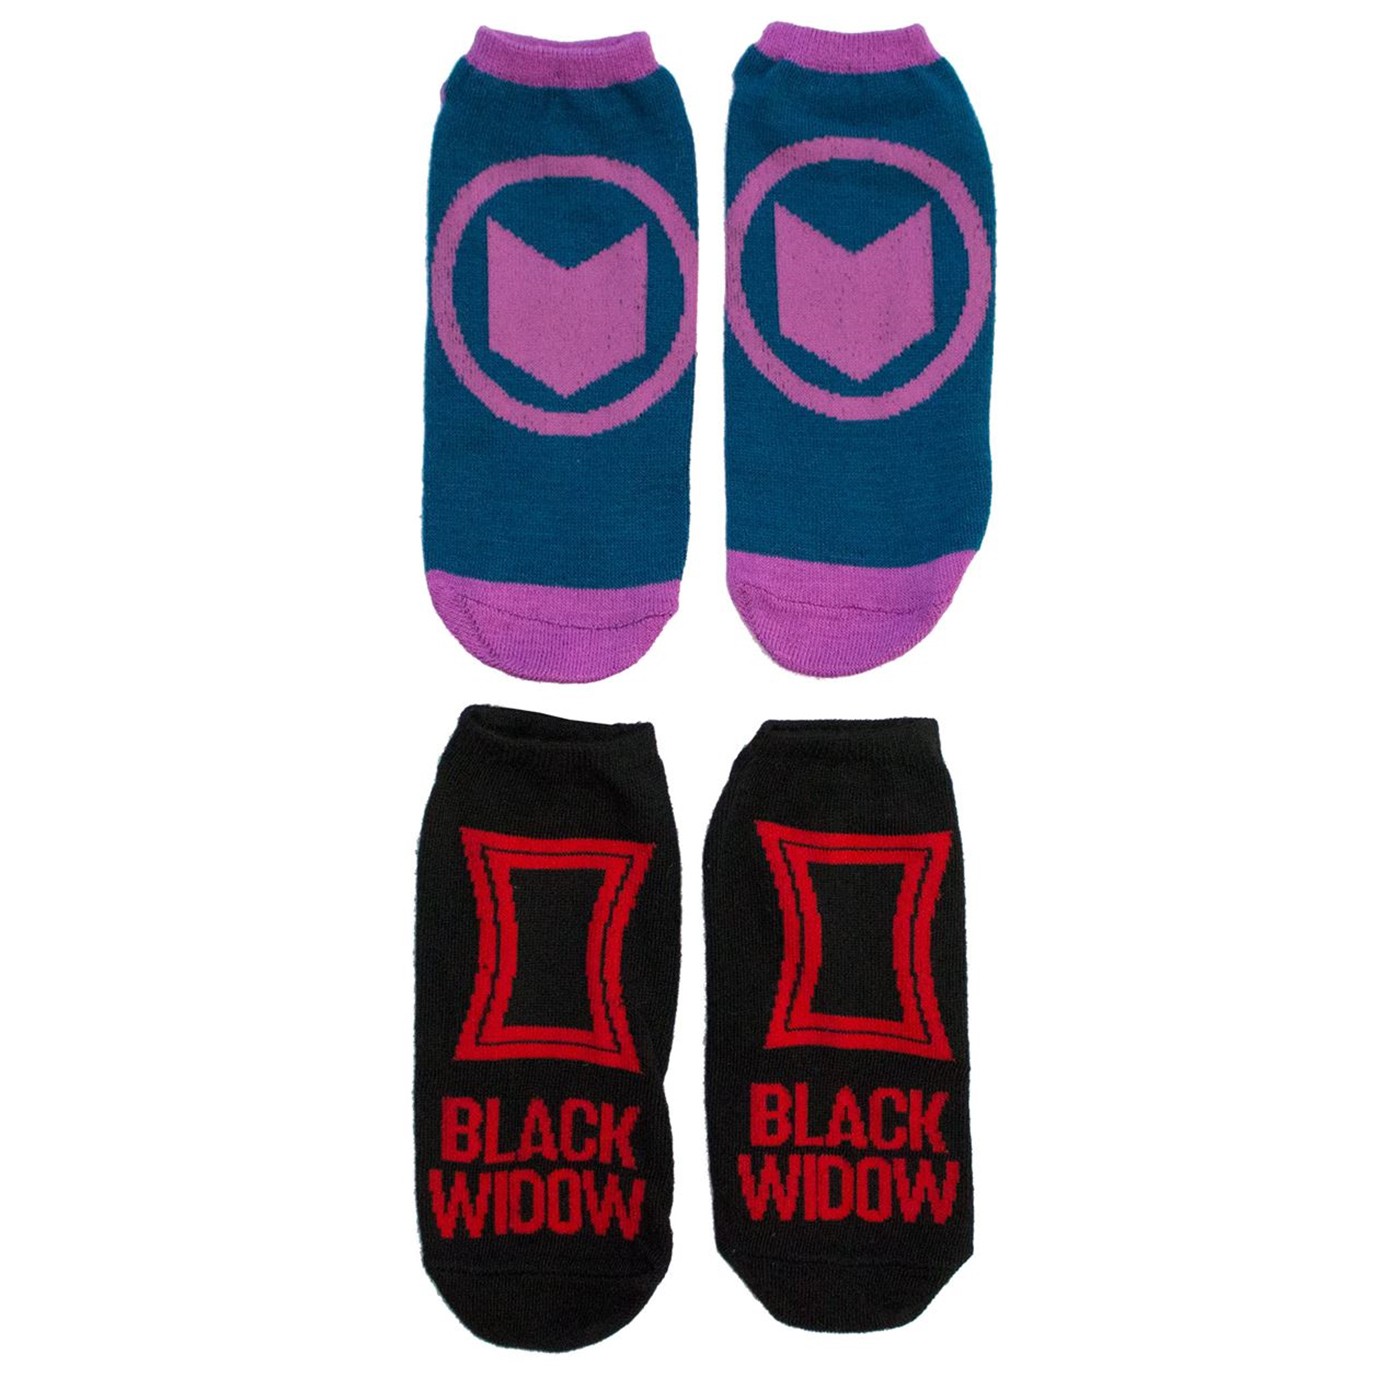 Hawkeye and Black Widow 2-pack Women's Ankle socks